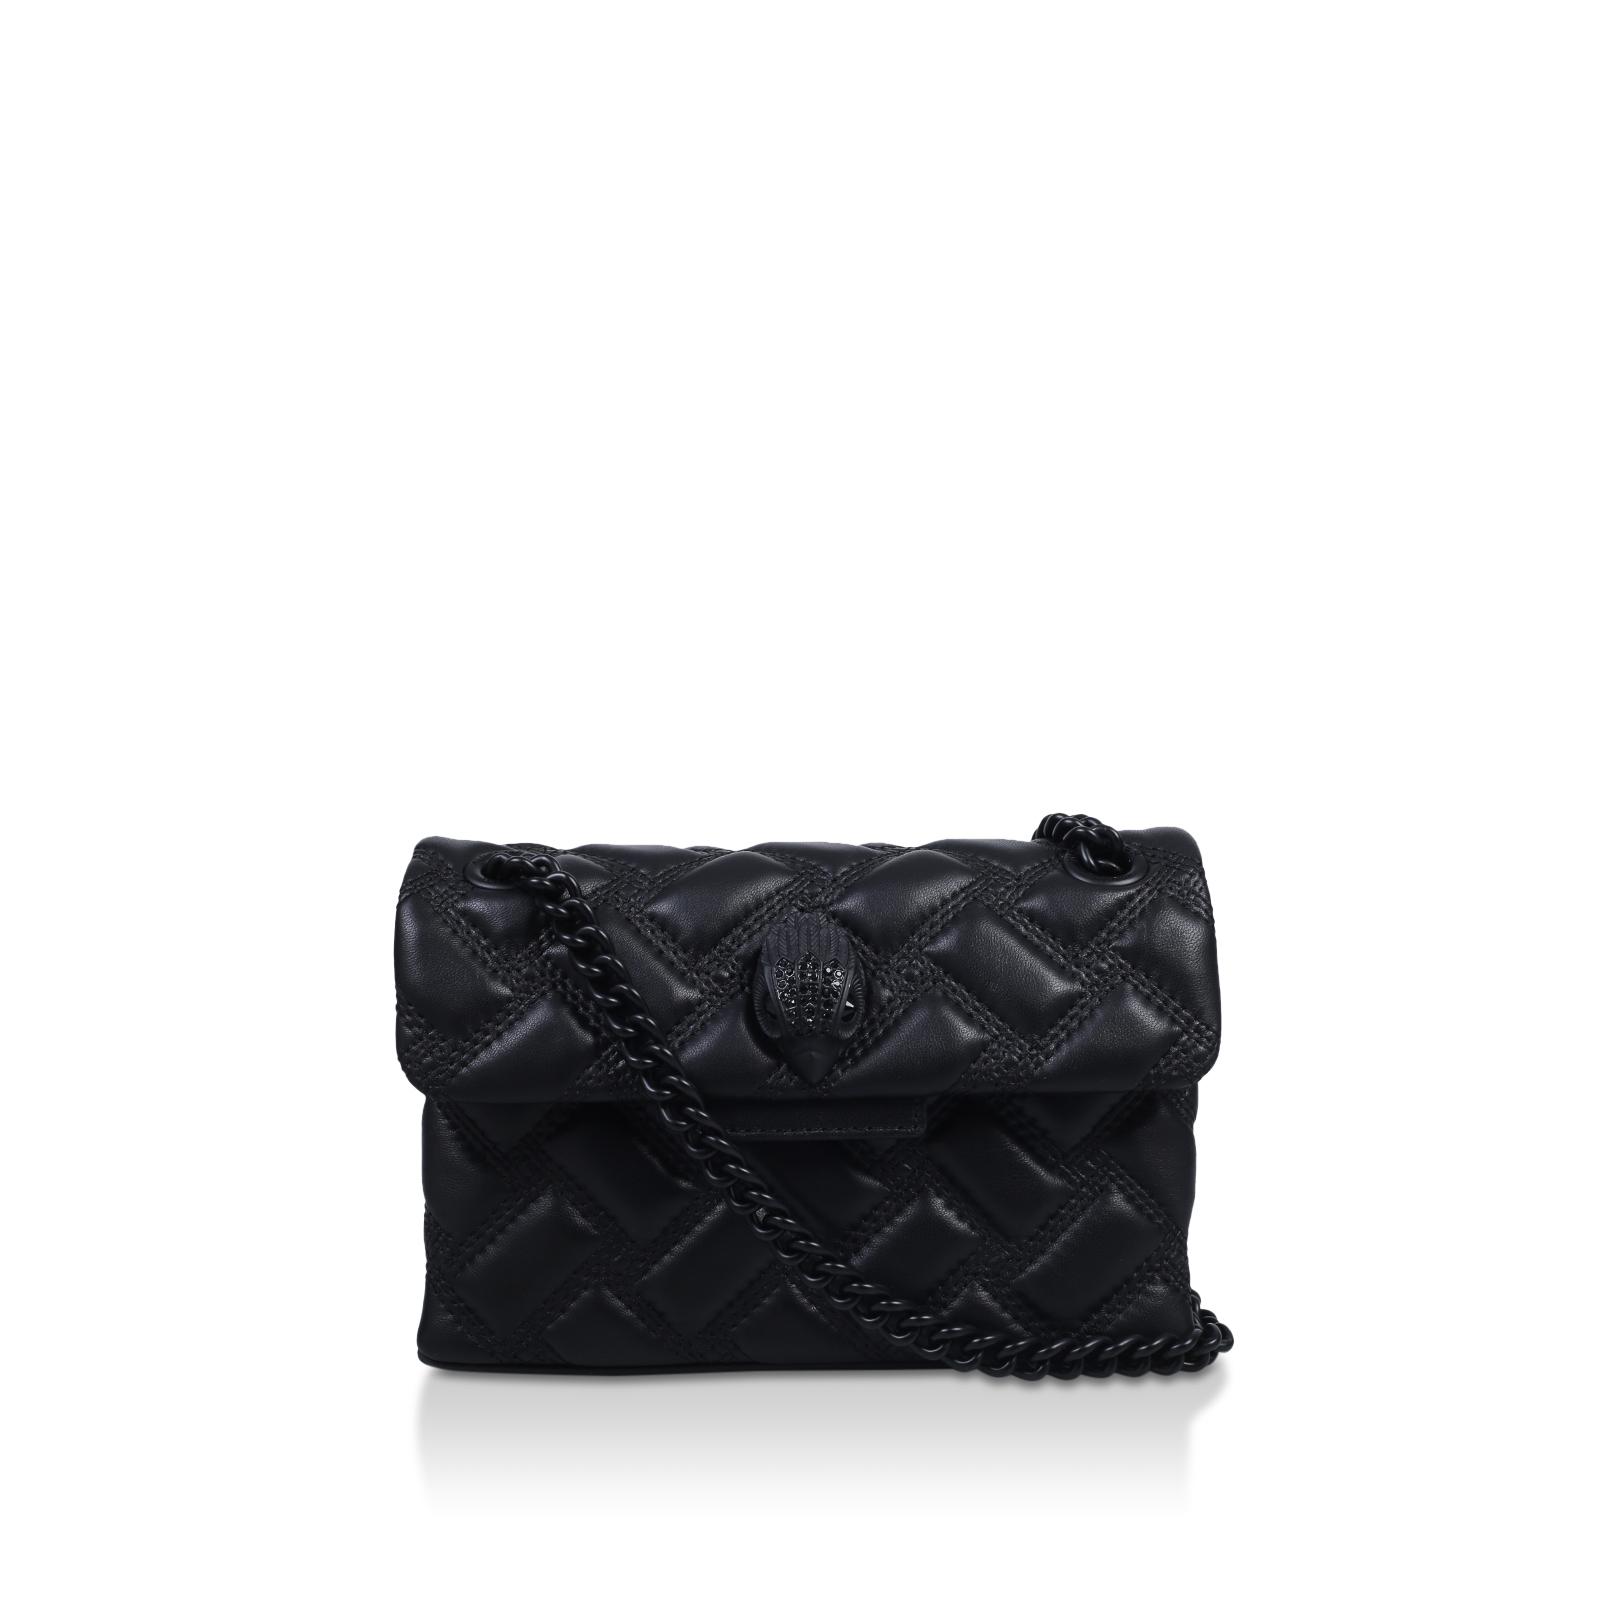 MINI KENSINGTON DRENCH Black Quilted Leather Mini Bag by KURT GEIGER LONDON